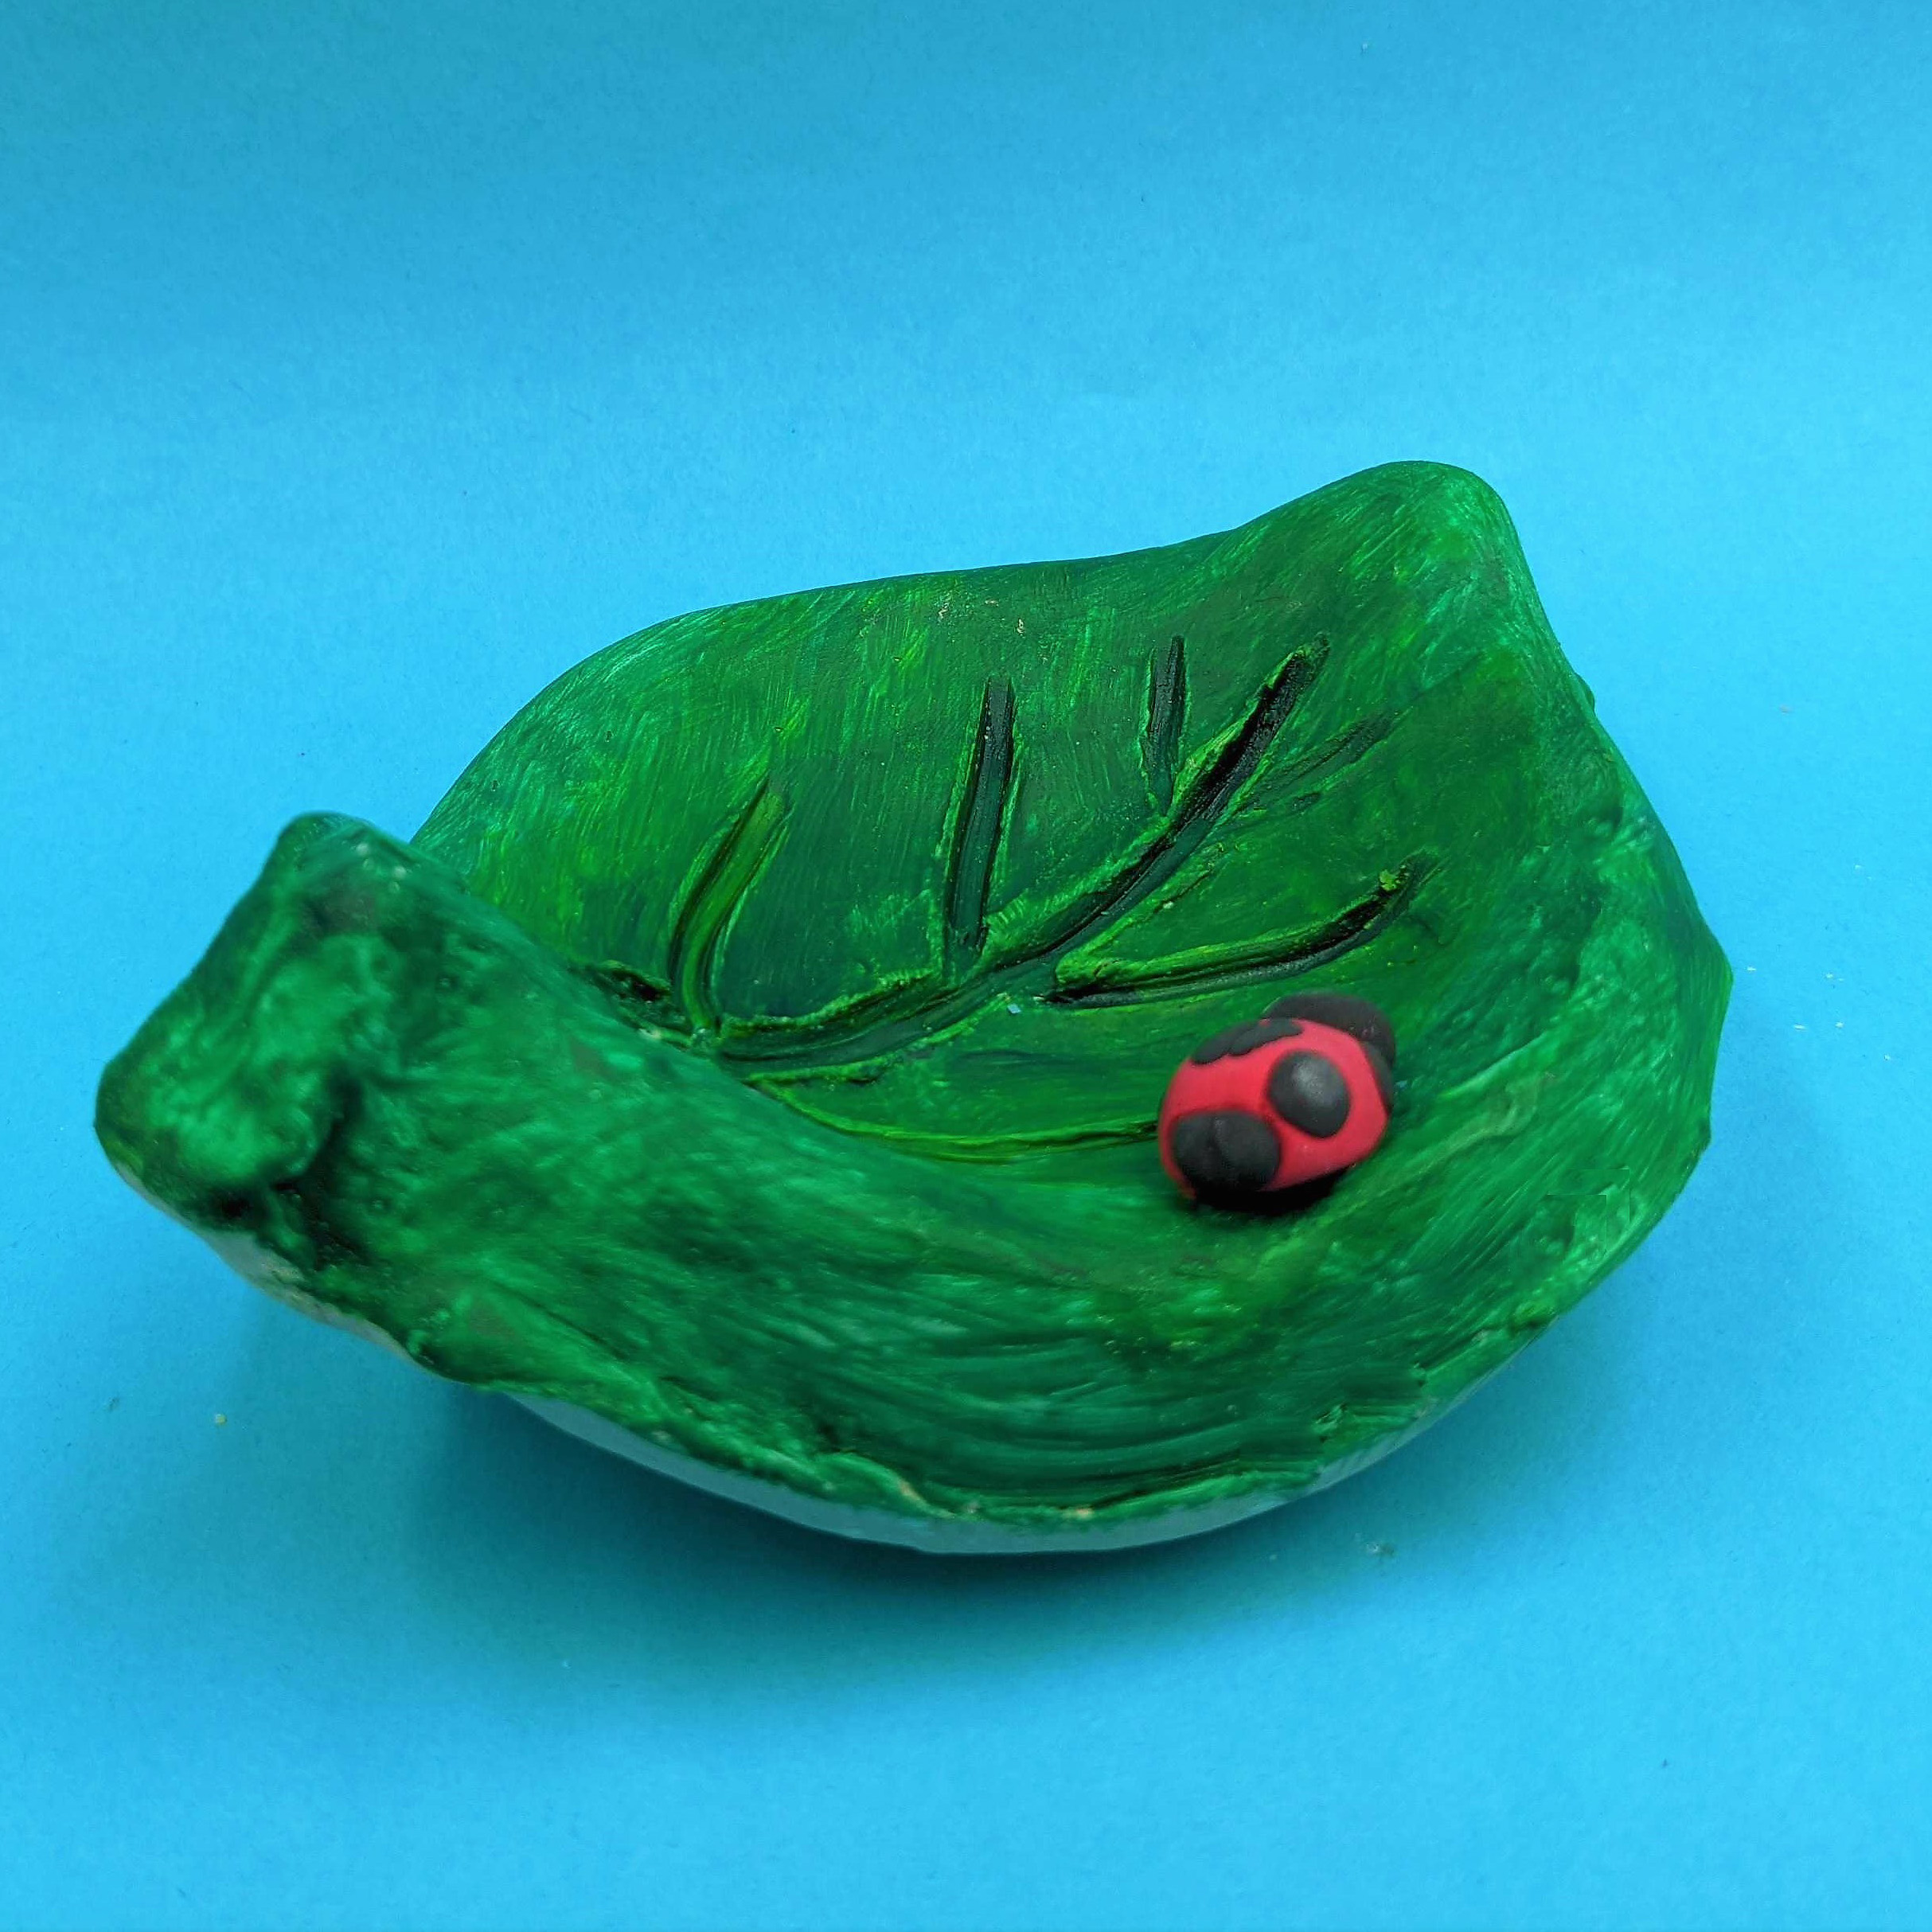 Kidcreate Studio - Newport News, Leaf bowl Art Project